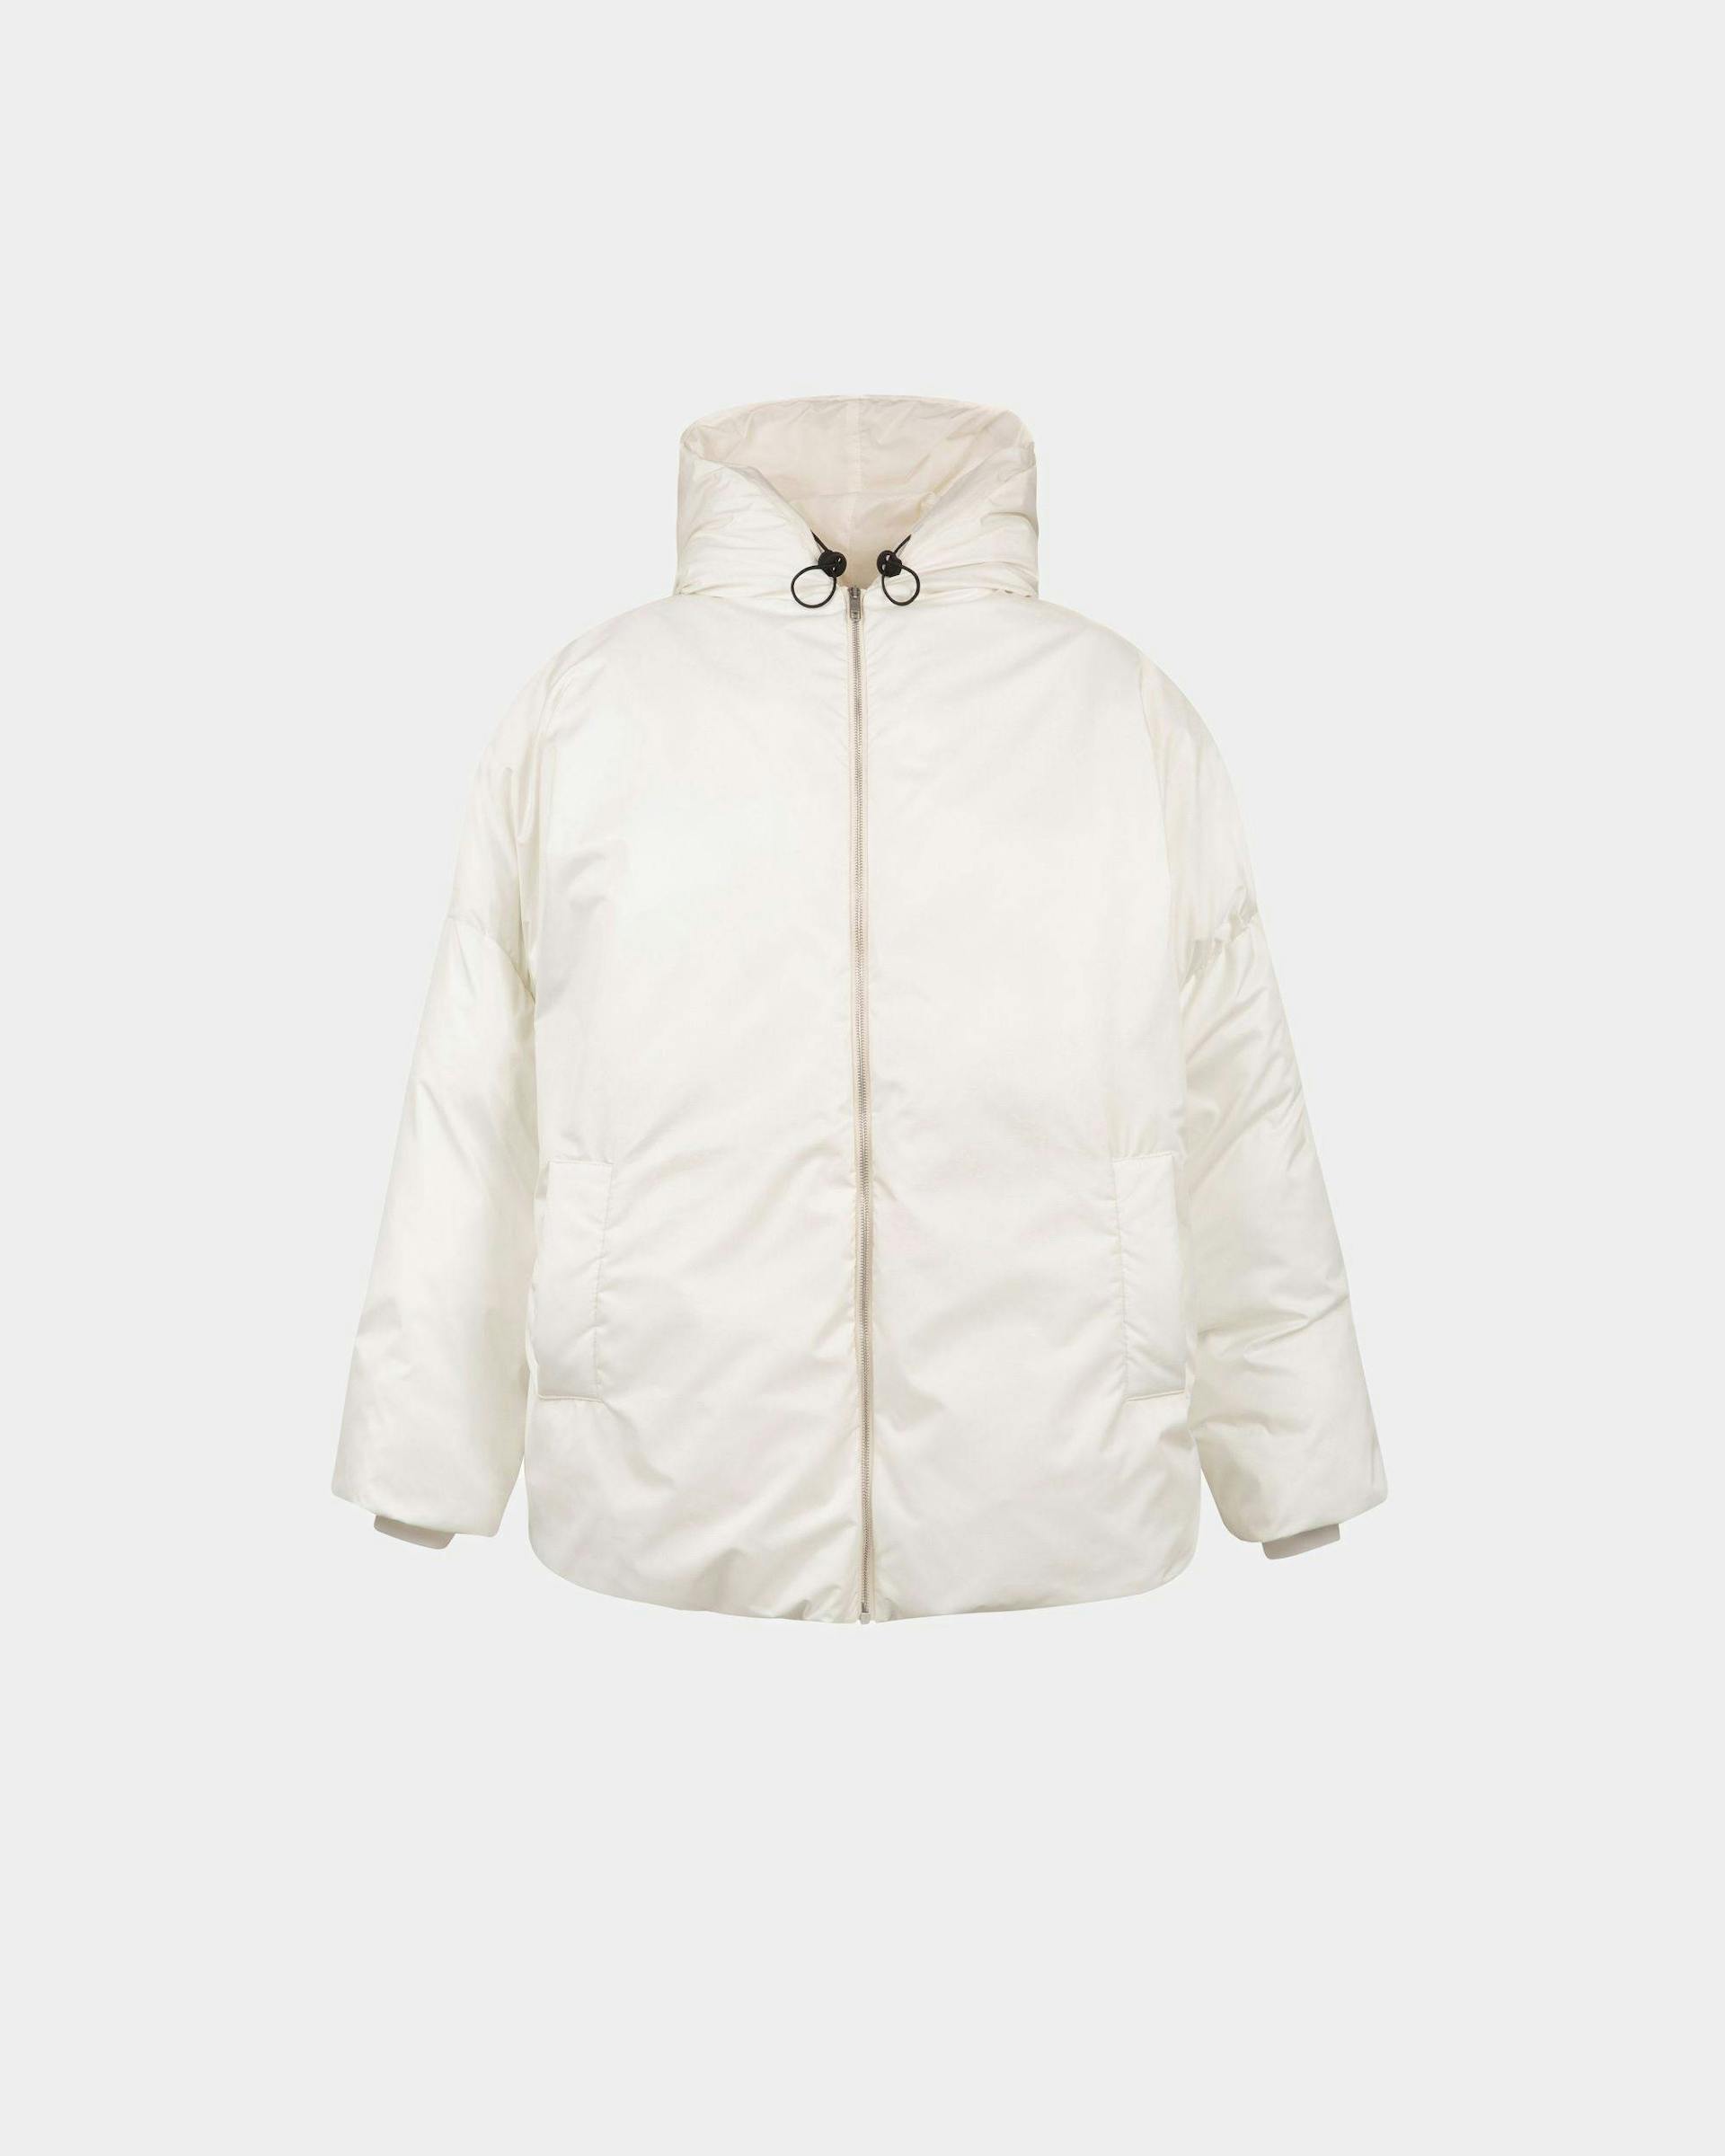 Women's Puffer Jacket In White Nylon | Bally | Still Life Front